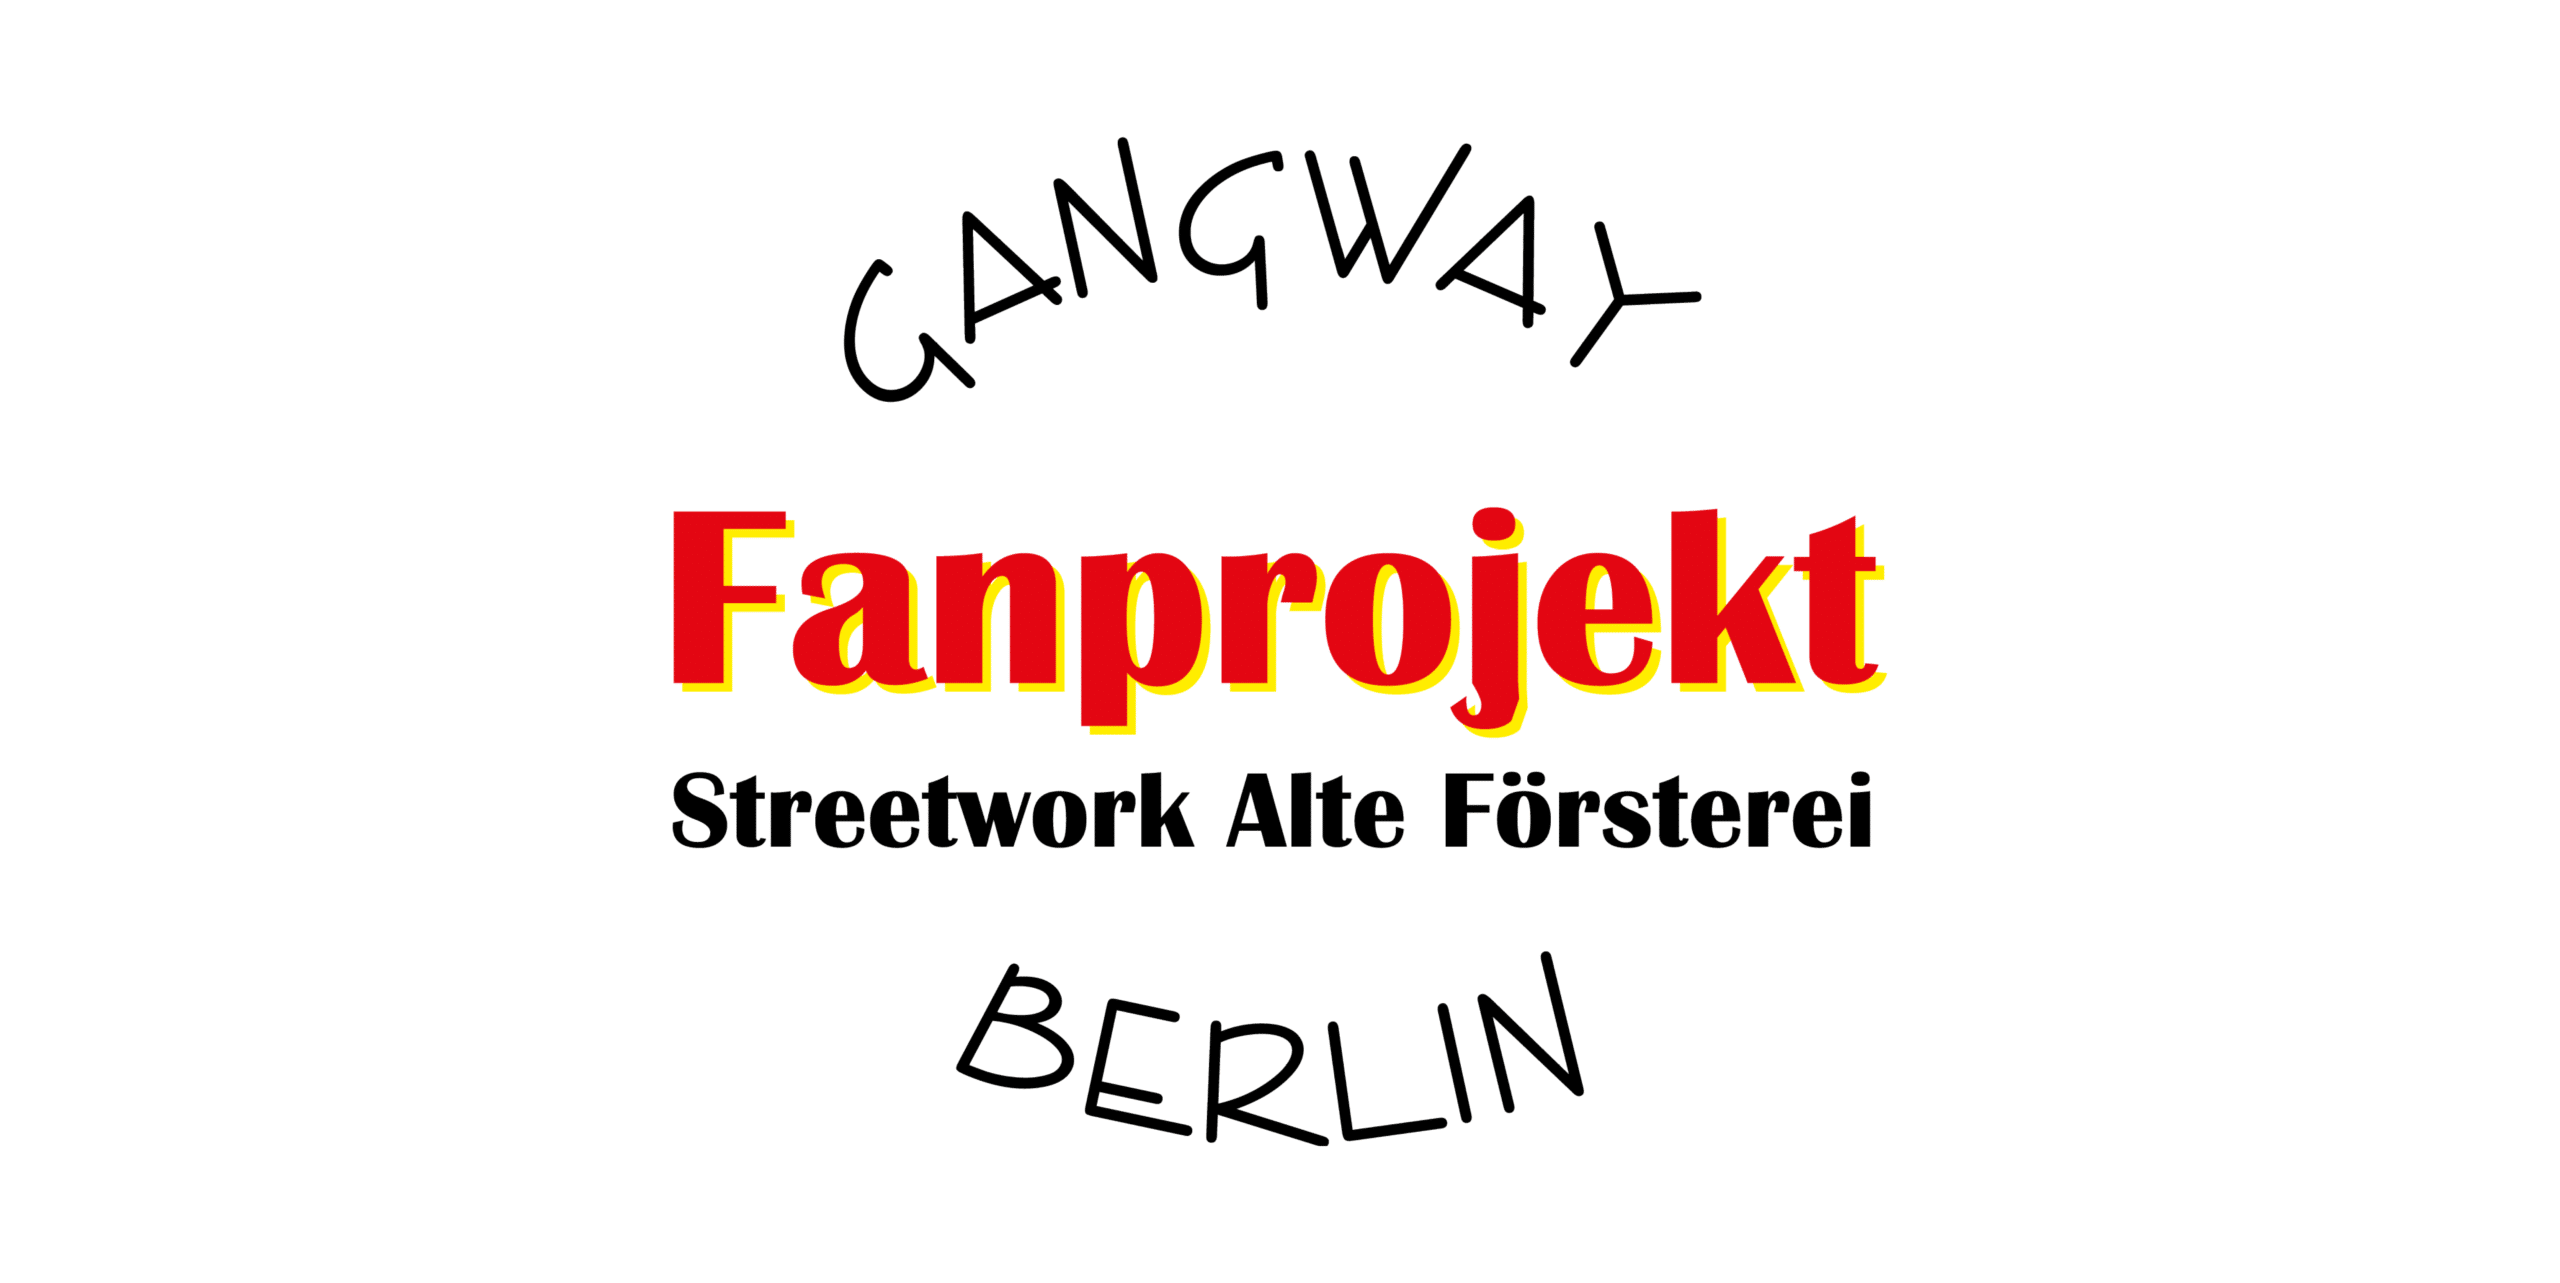 Streetwork Alte Försterei